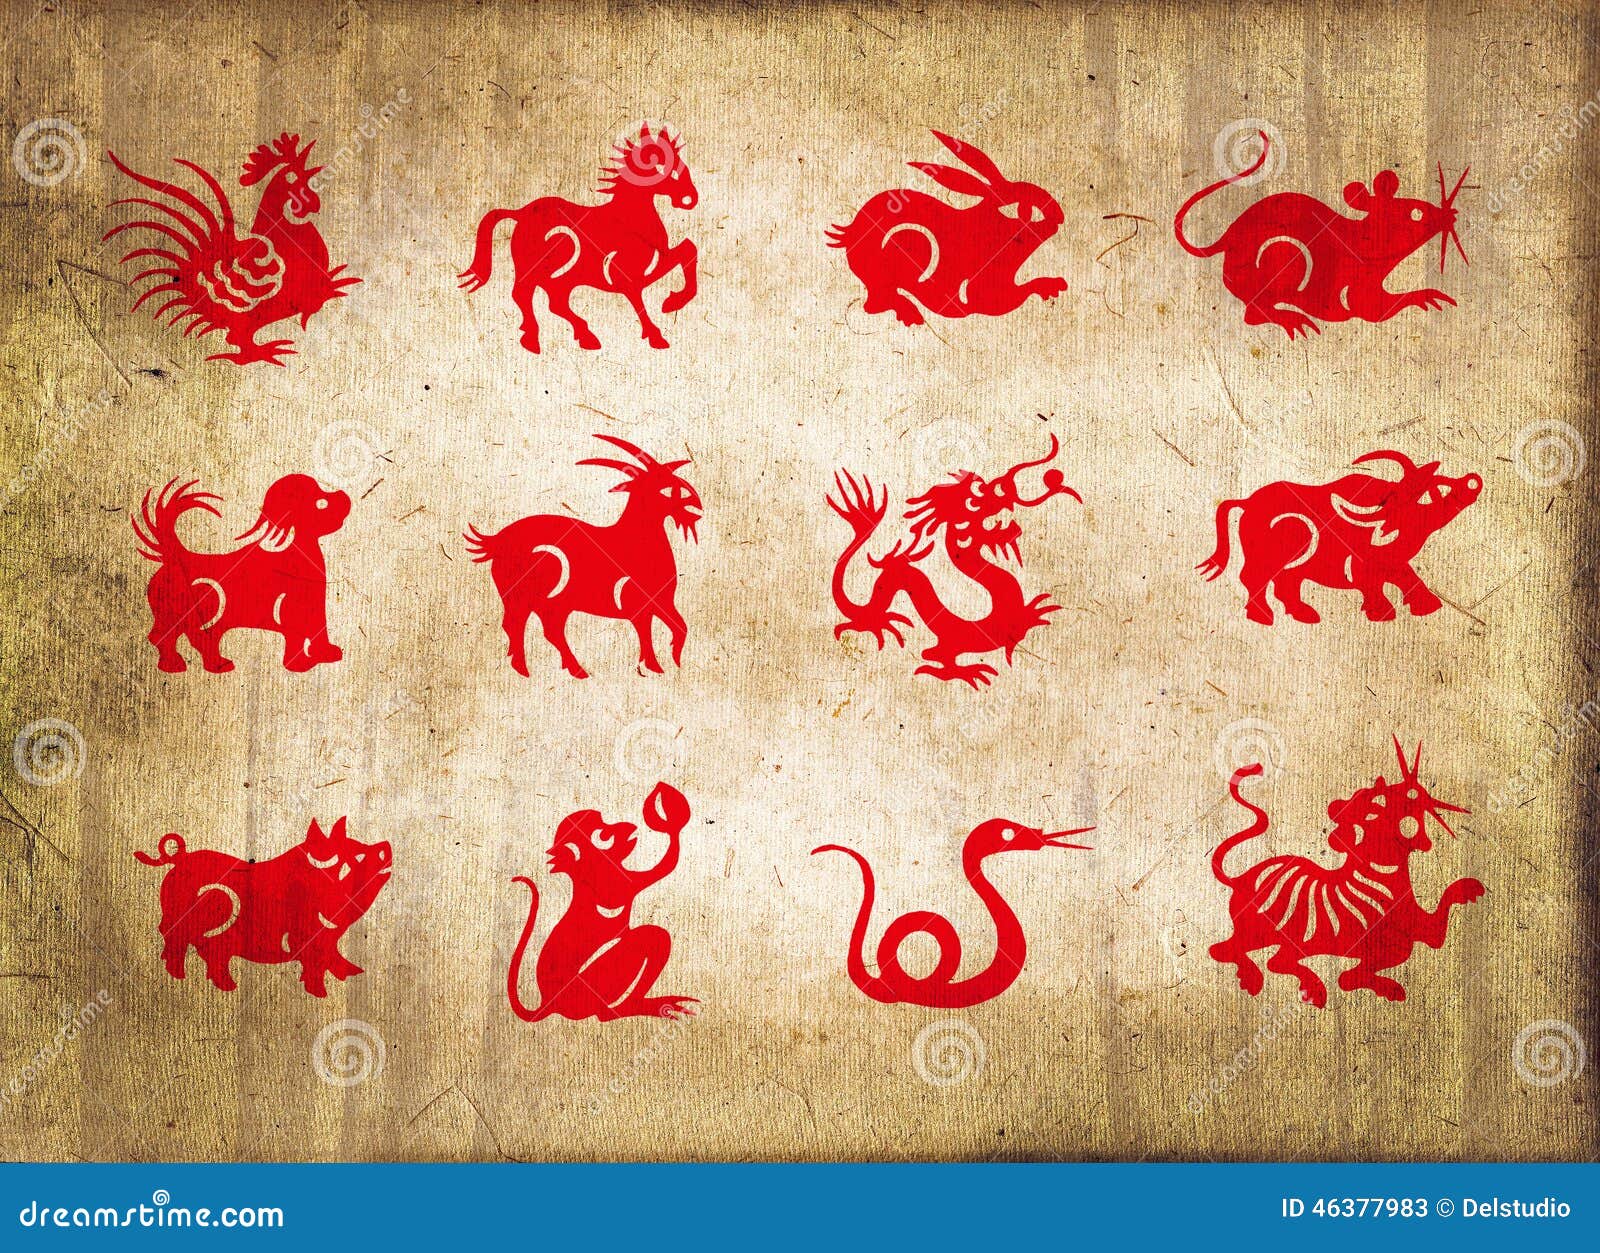 Animal Of The Chinese Zodiac, Sepia Textured Background Stock Photo - Image: 46377983